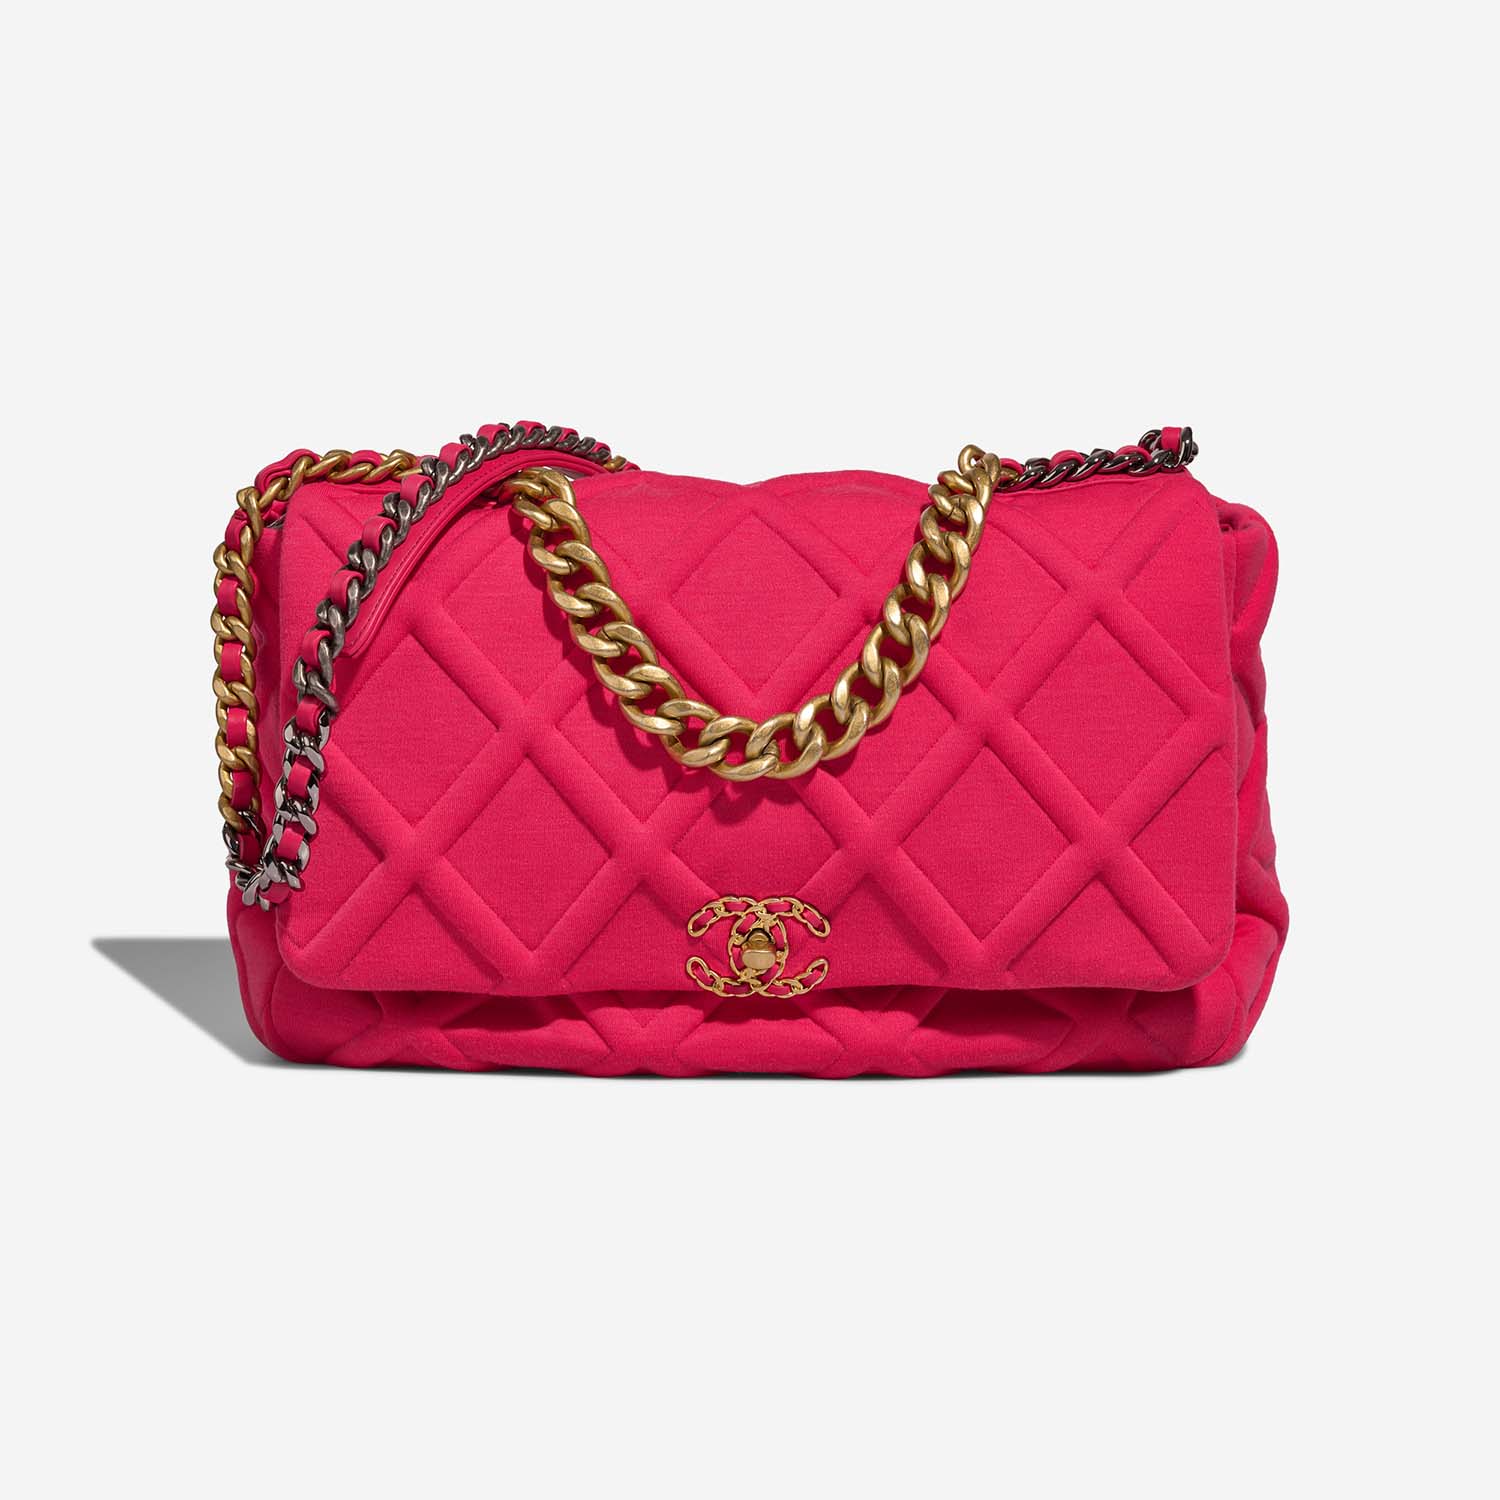 chanel 19 handbag pink